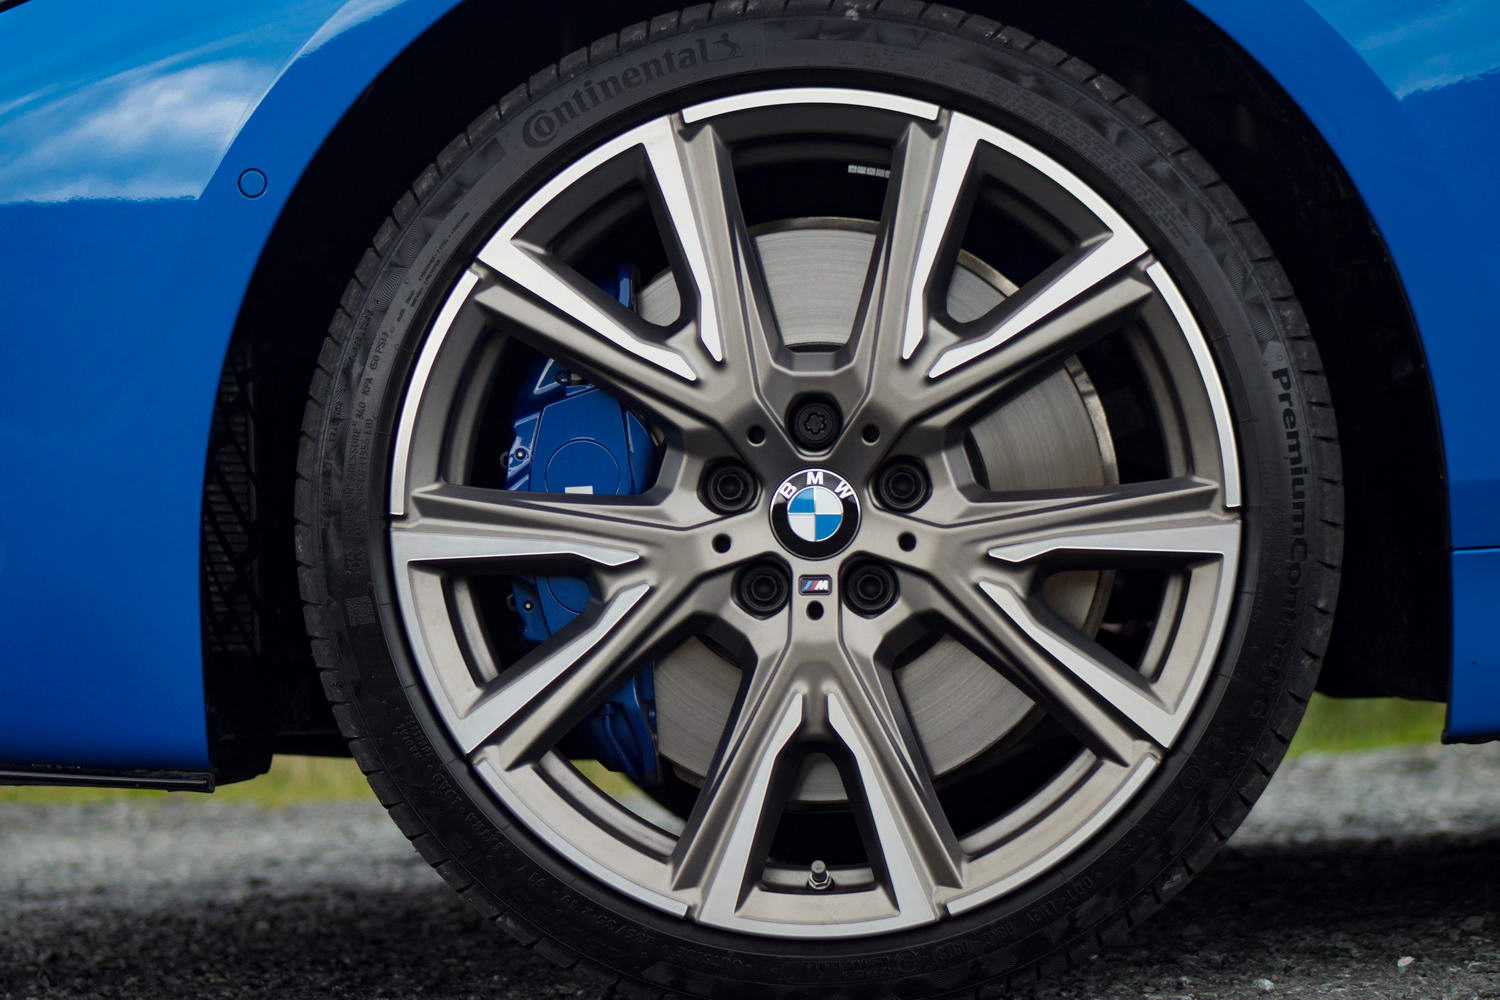 Hot hatch twin test: BMW M135i vs Mercedes-AMG A 35